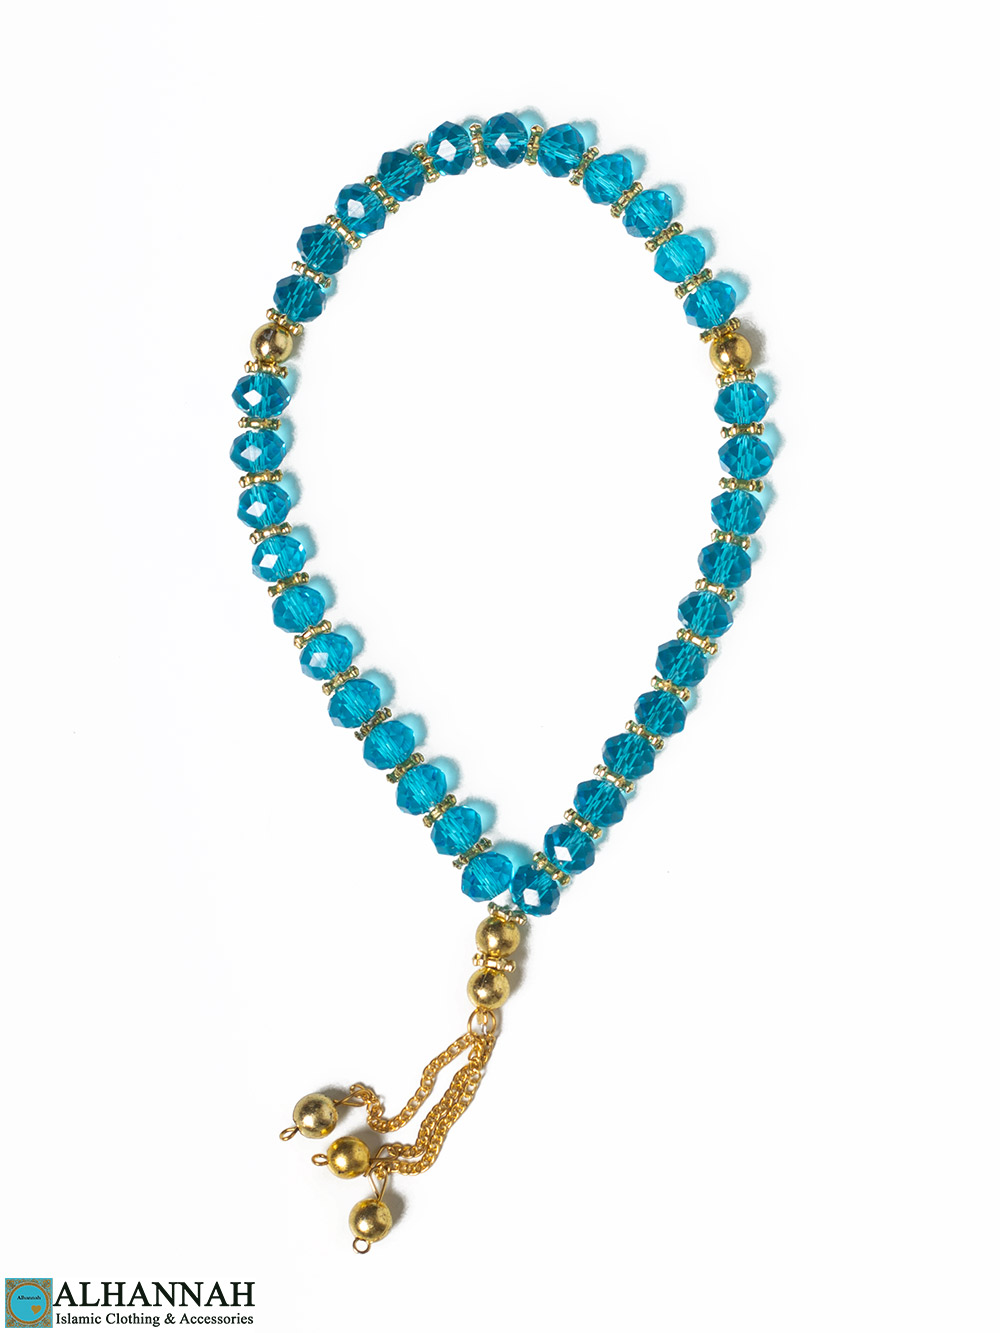 Aqua Blue Crystal Tasbih – 33 beads | ii1595 » Alhannah Islamic Clothing